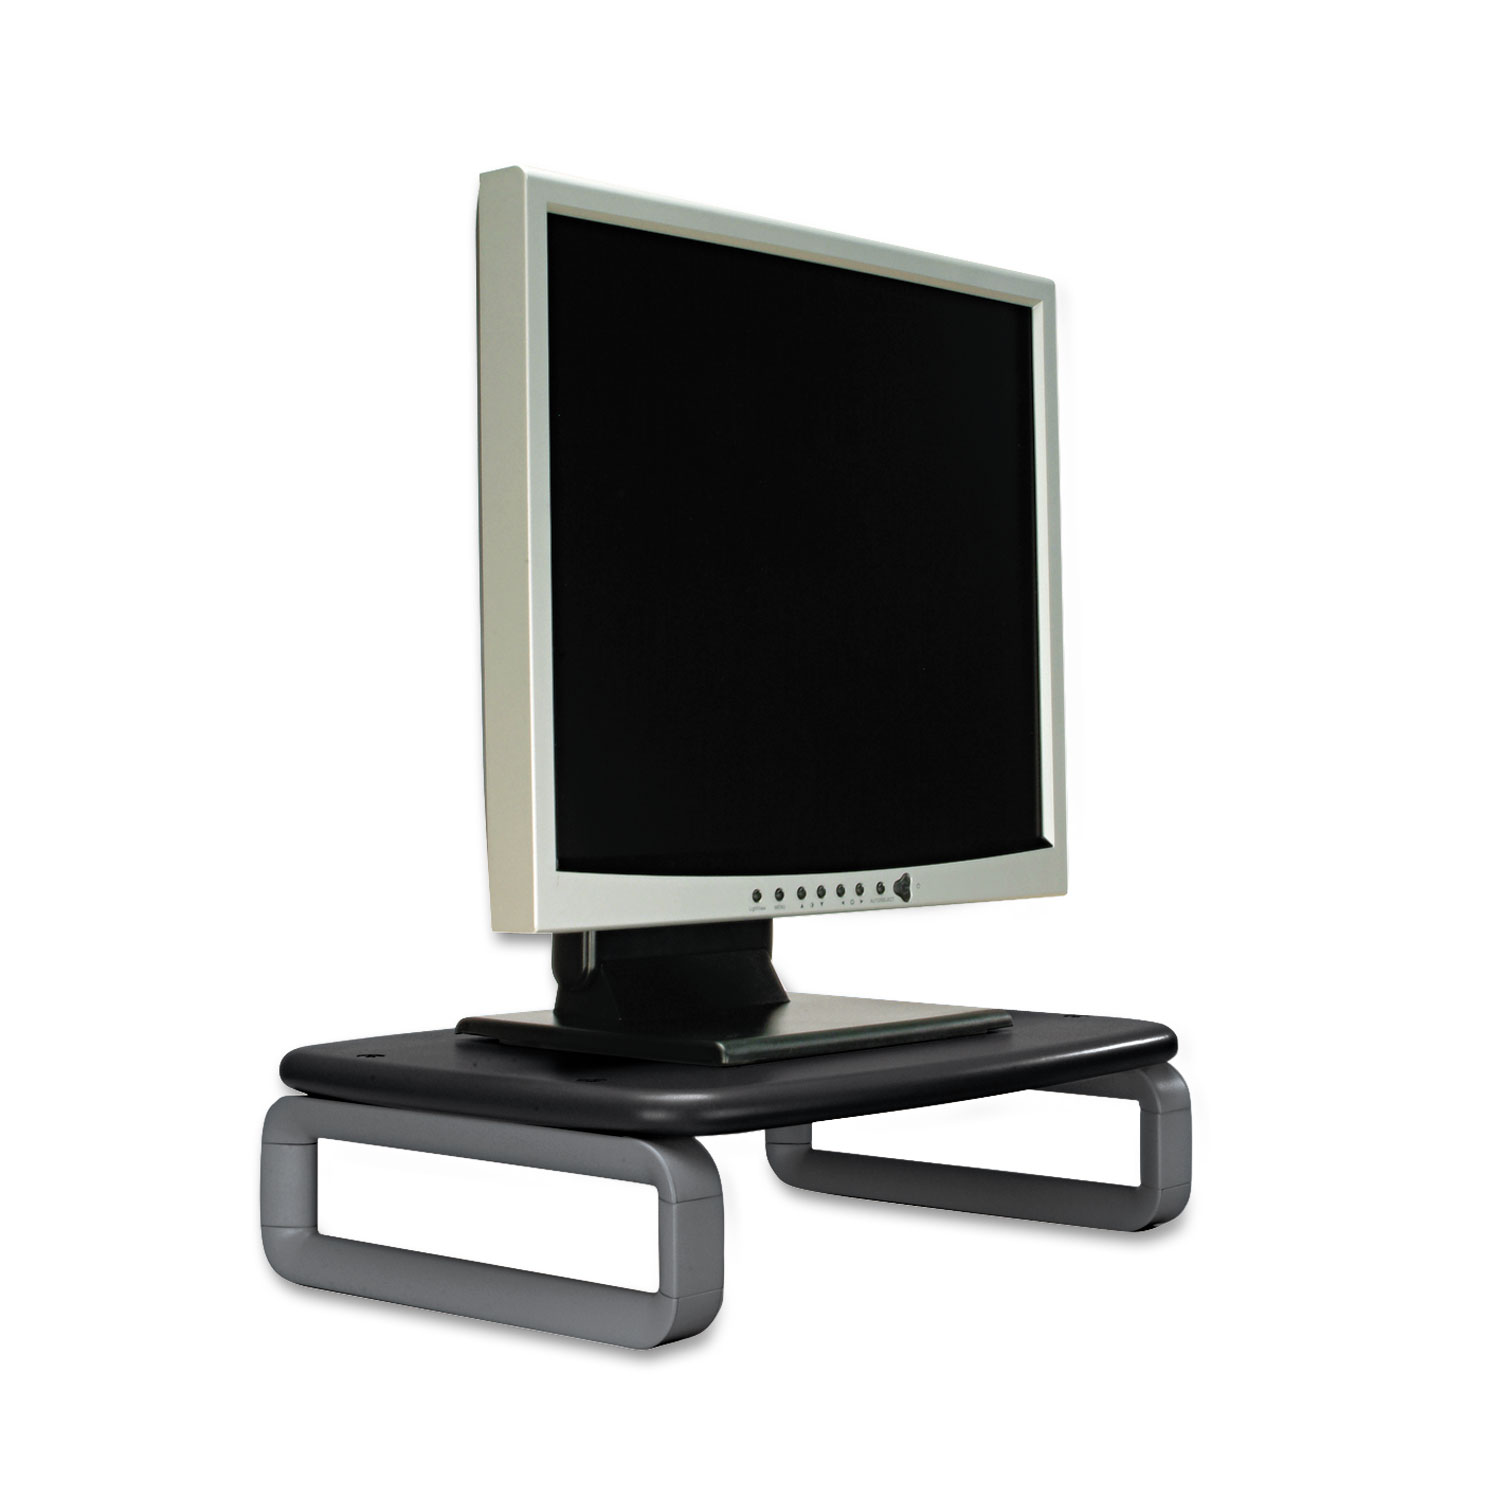  Kensington K60089 Monitor Stand Plus with SmartFit System, 15.5 x 12 x 6, Black/Gray (KMW60089) 